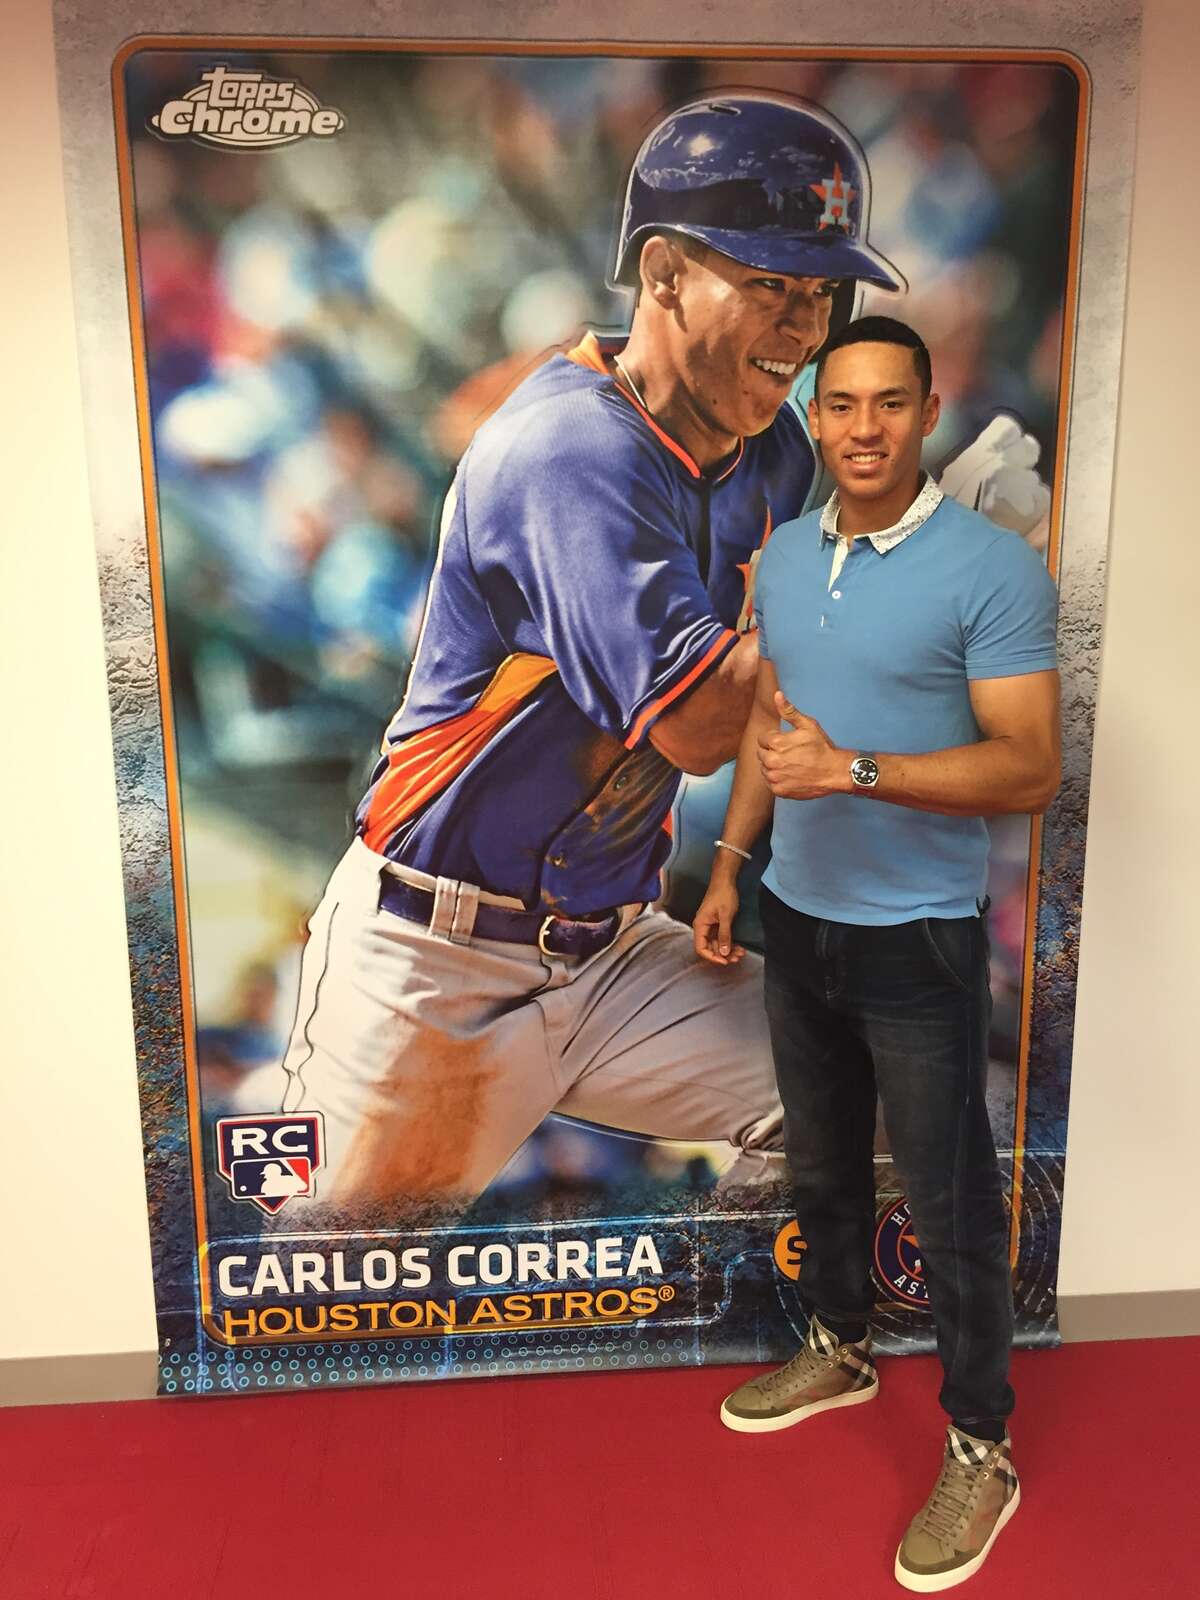 Houston Astros' Carlos Correa signs first endorsement deal